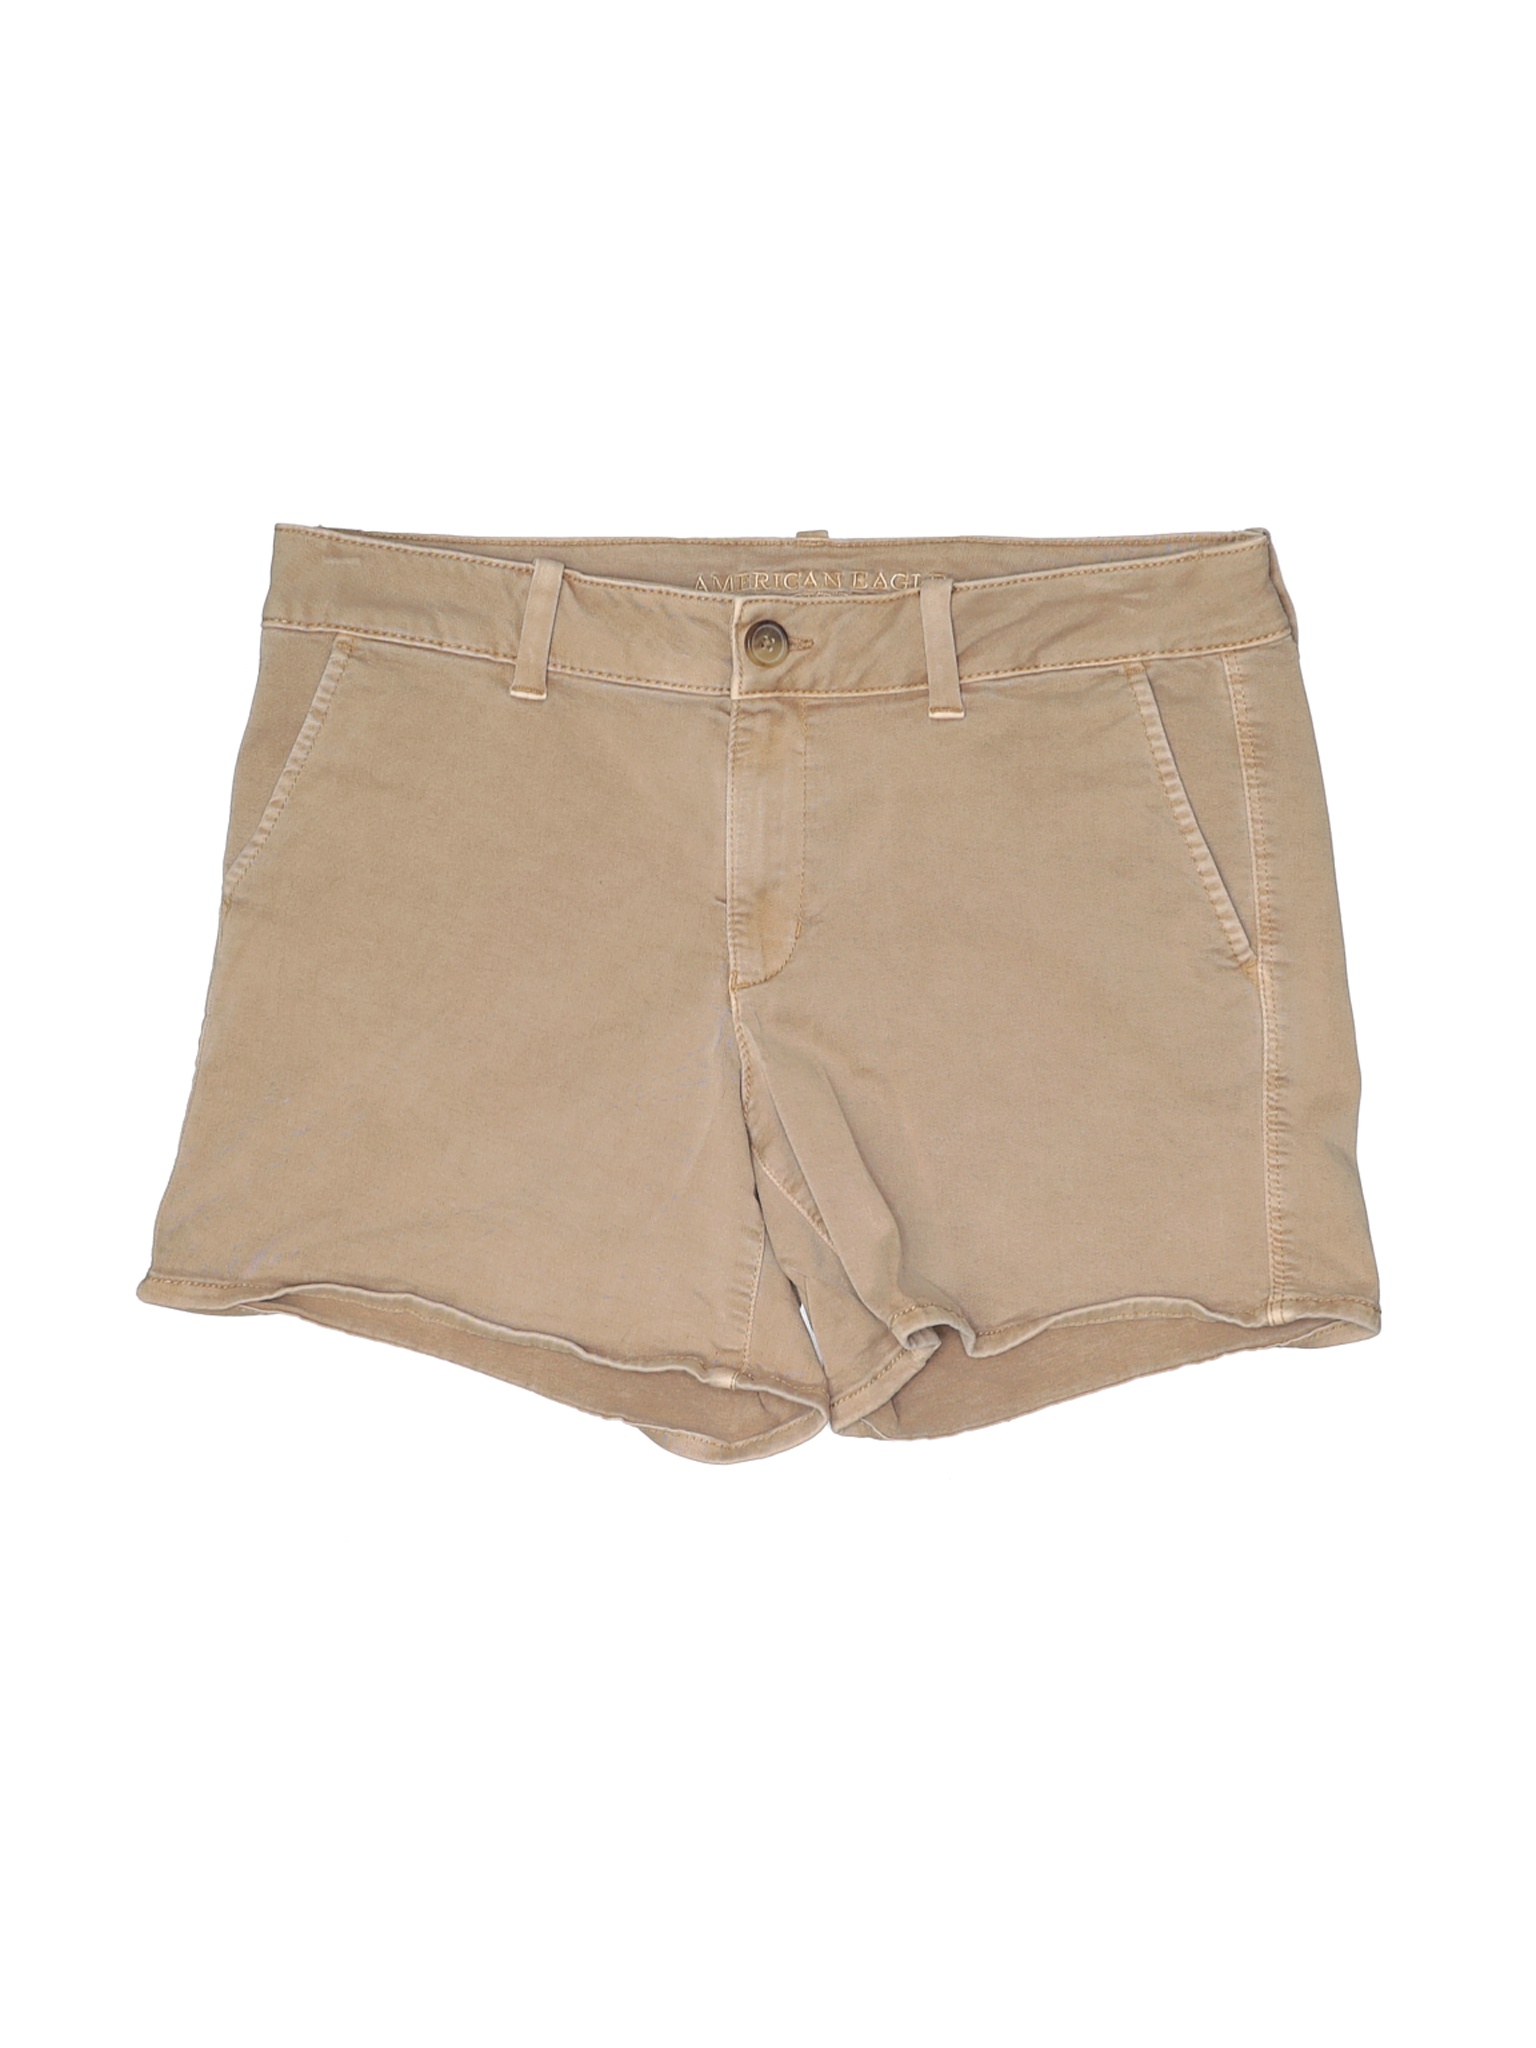 American Eagle Outfitters Women Brown Khaki Shorts 14 | eBay